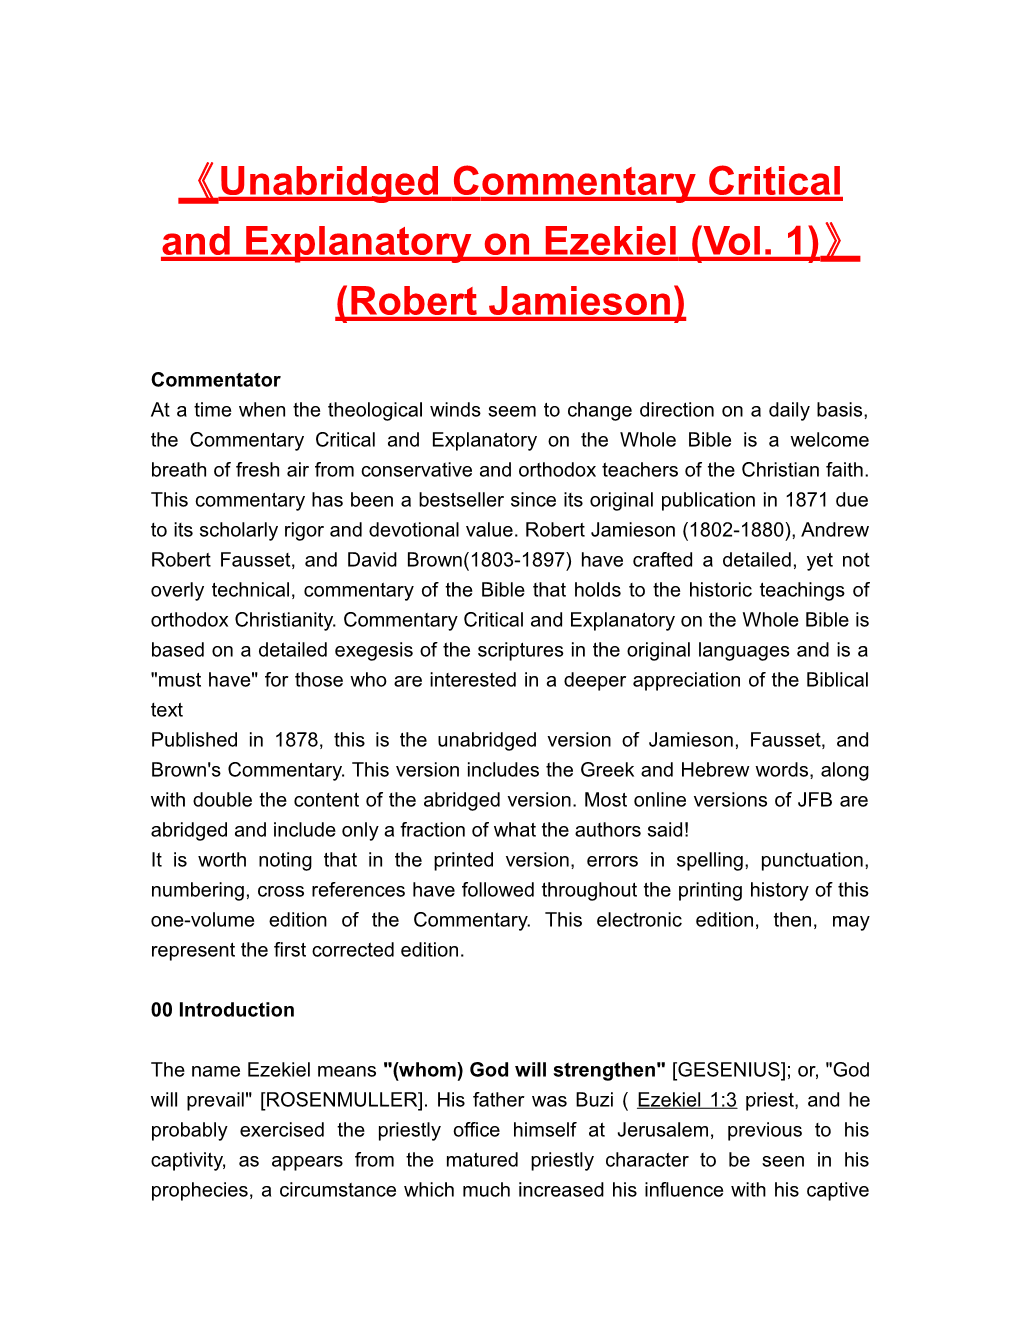 Unabridged Commentary Critical and Explanatory on Ezekiel (Vol. 1) (Robert Jamieson)